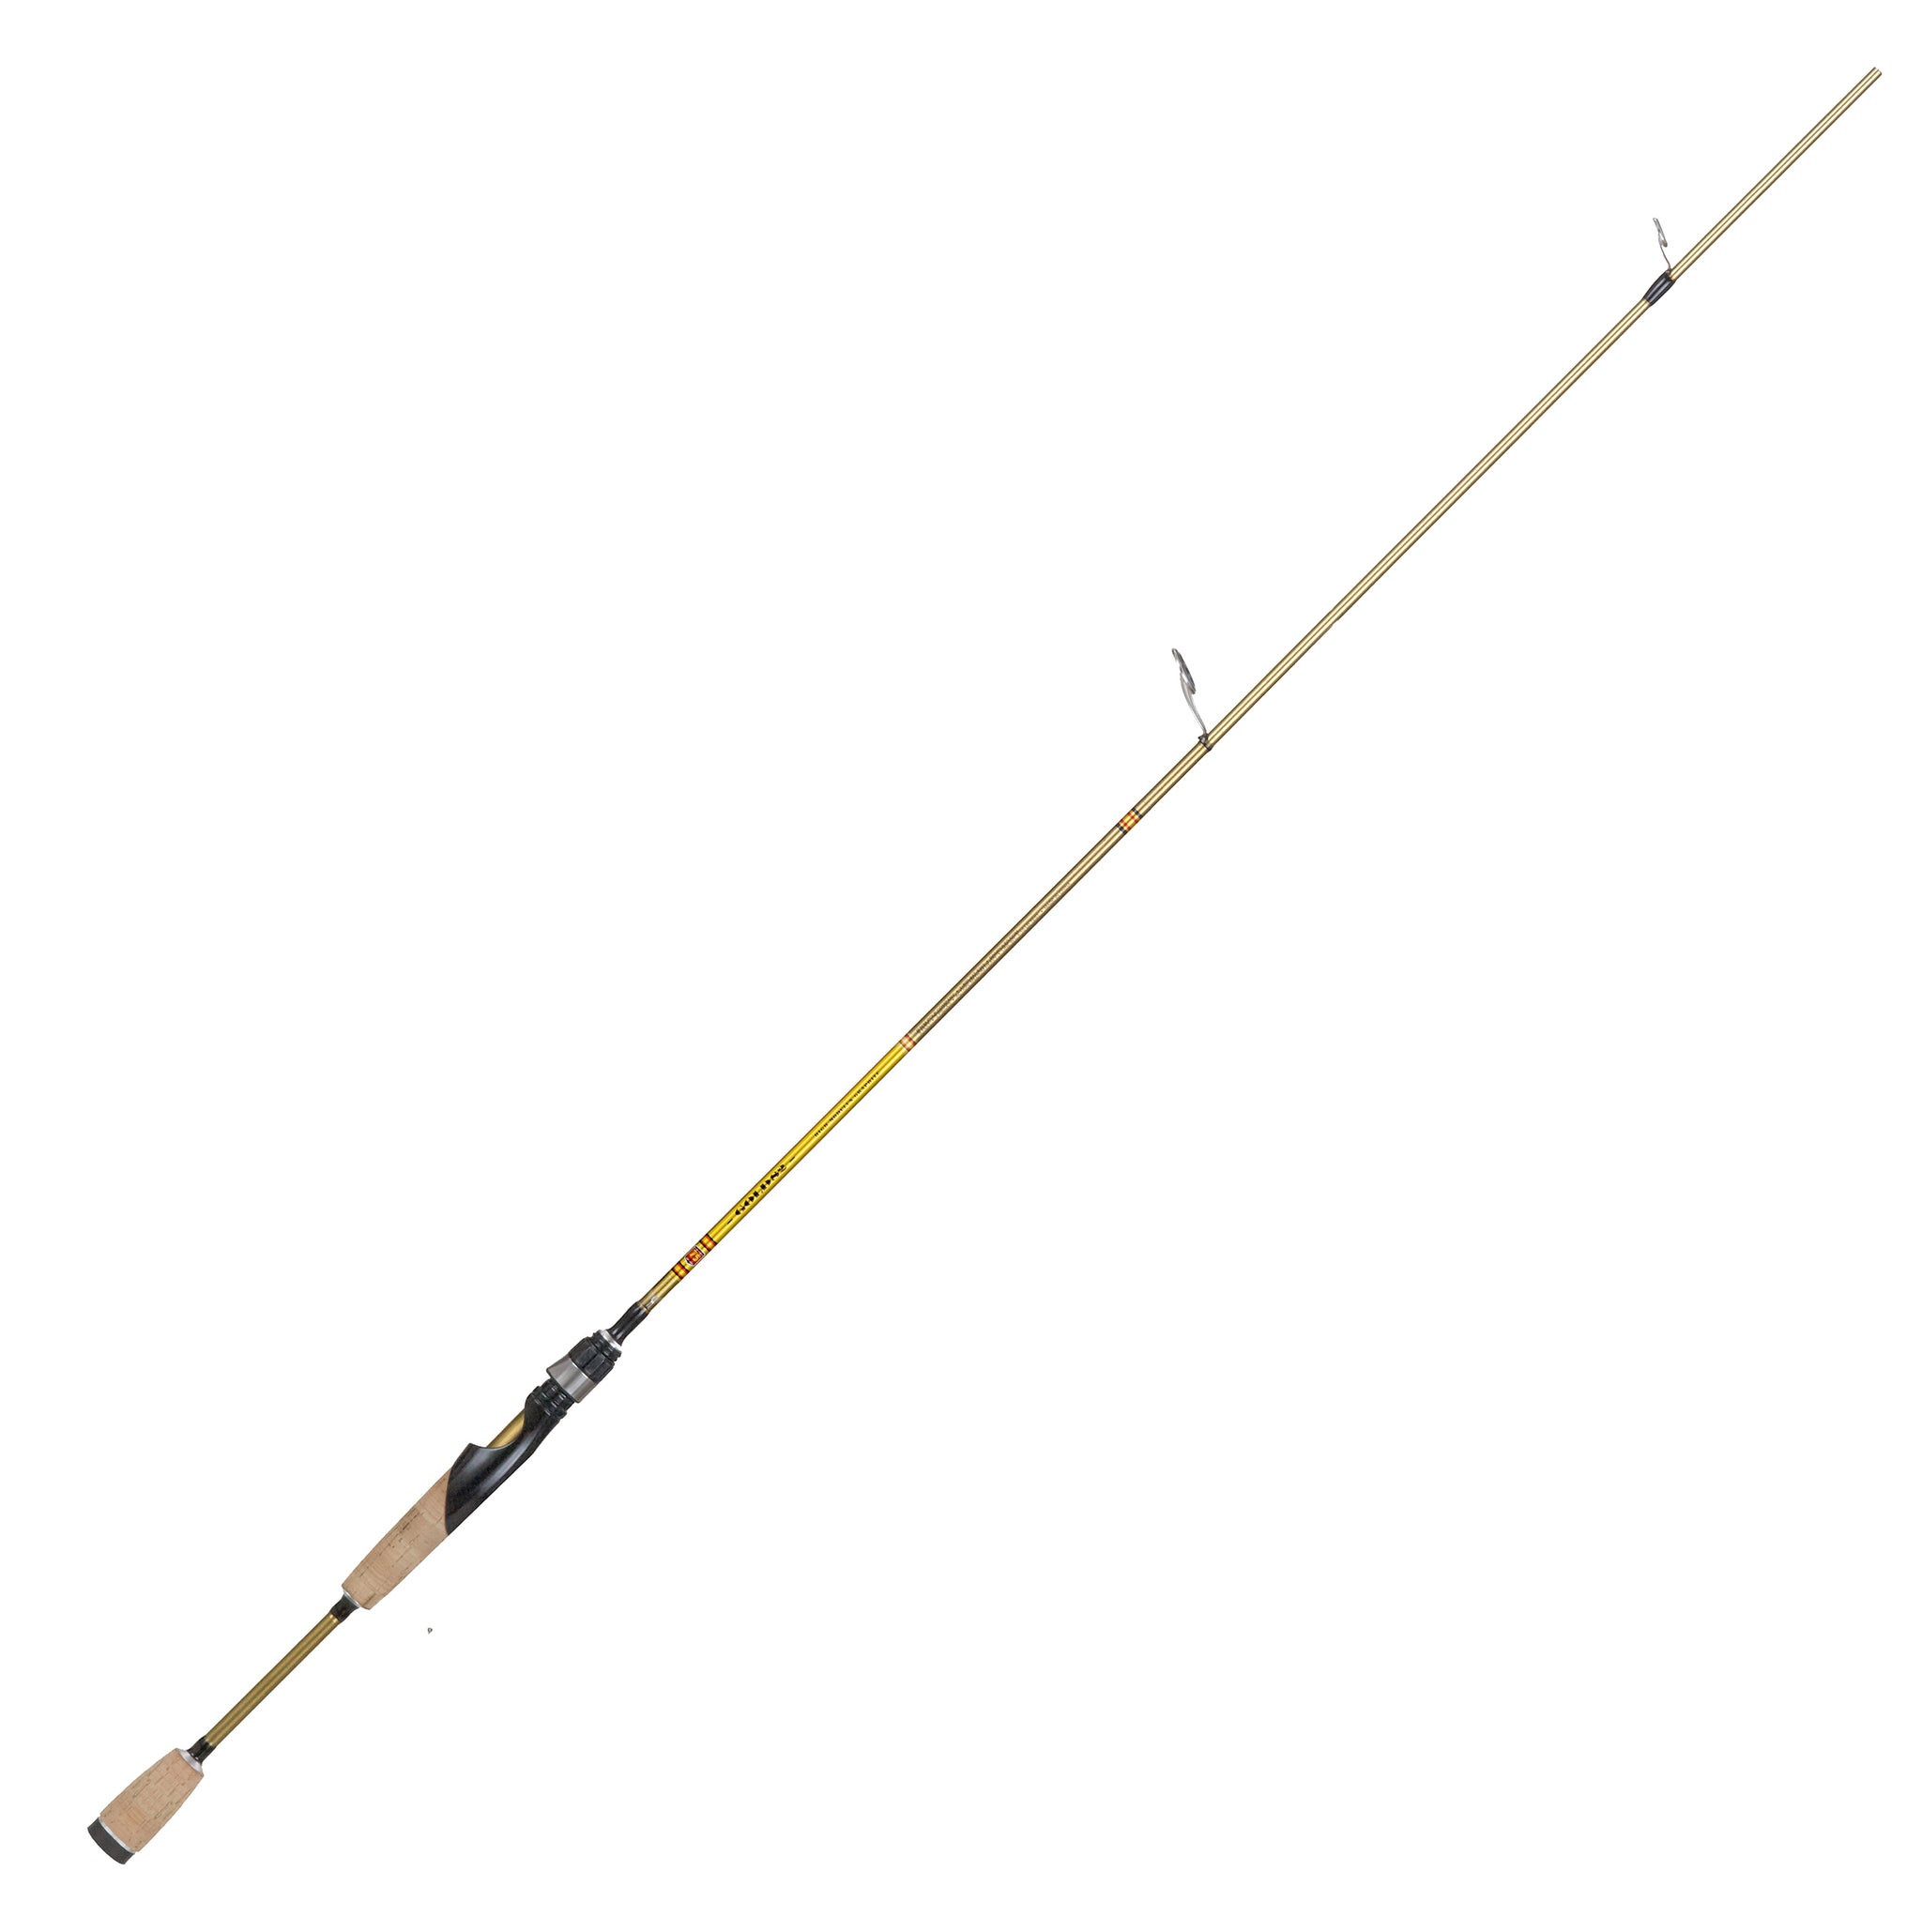  B&M LJ10 Little Jewel : Spinning Fishing Rods